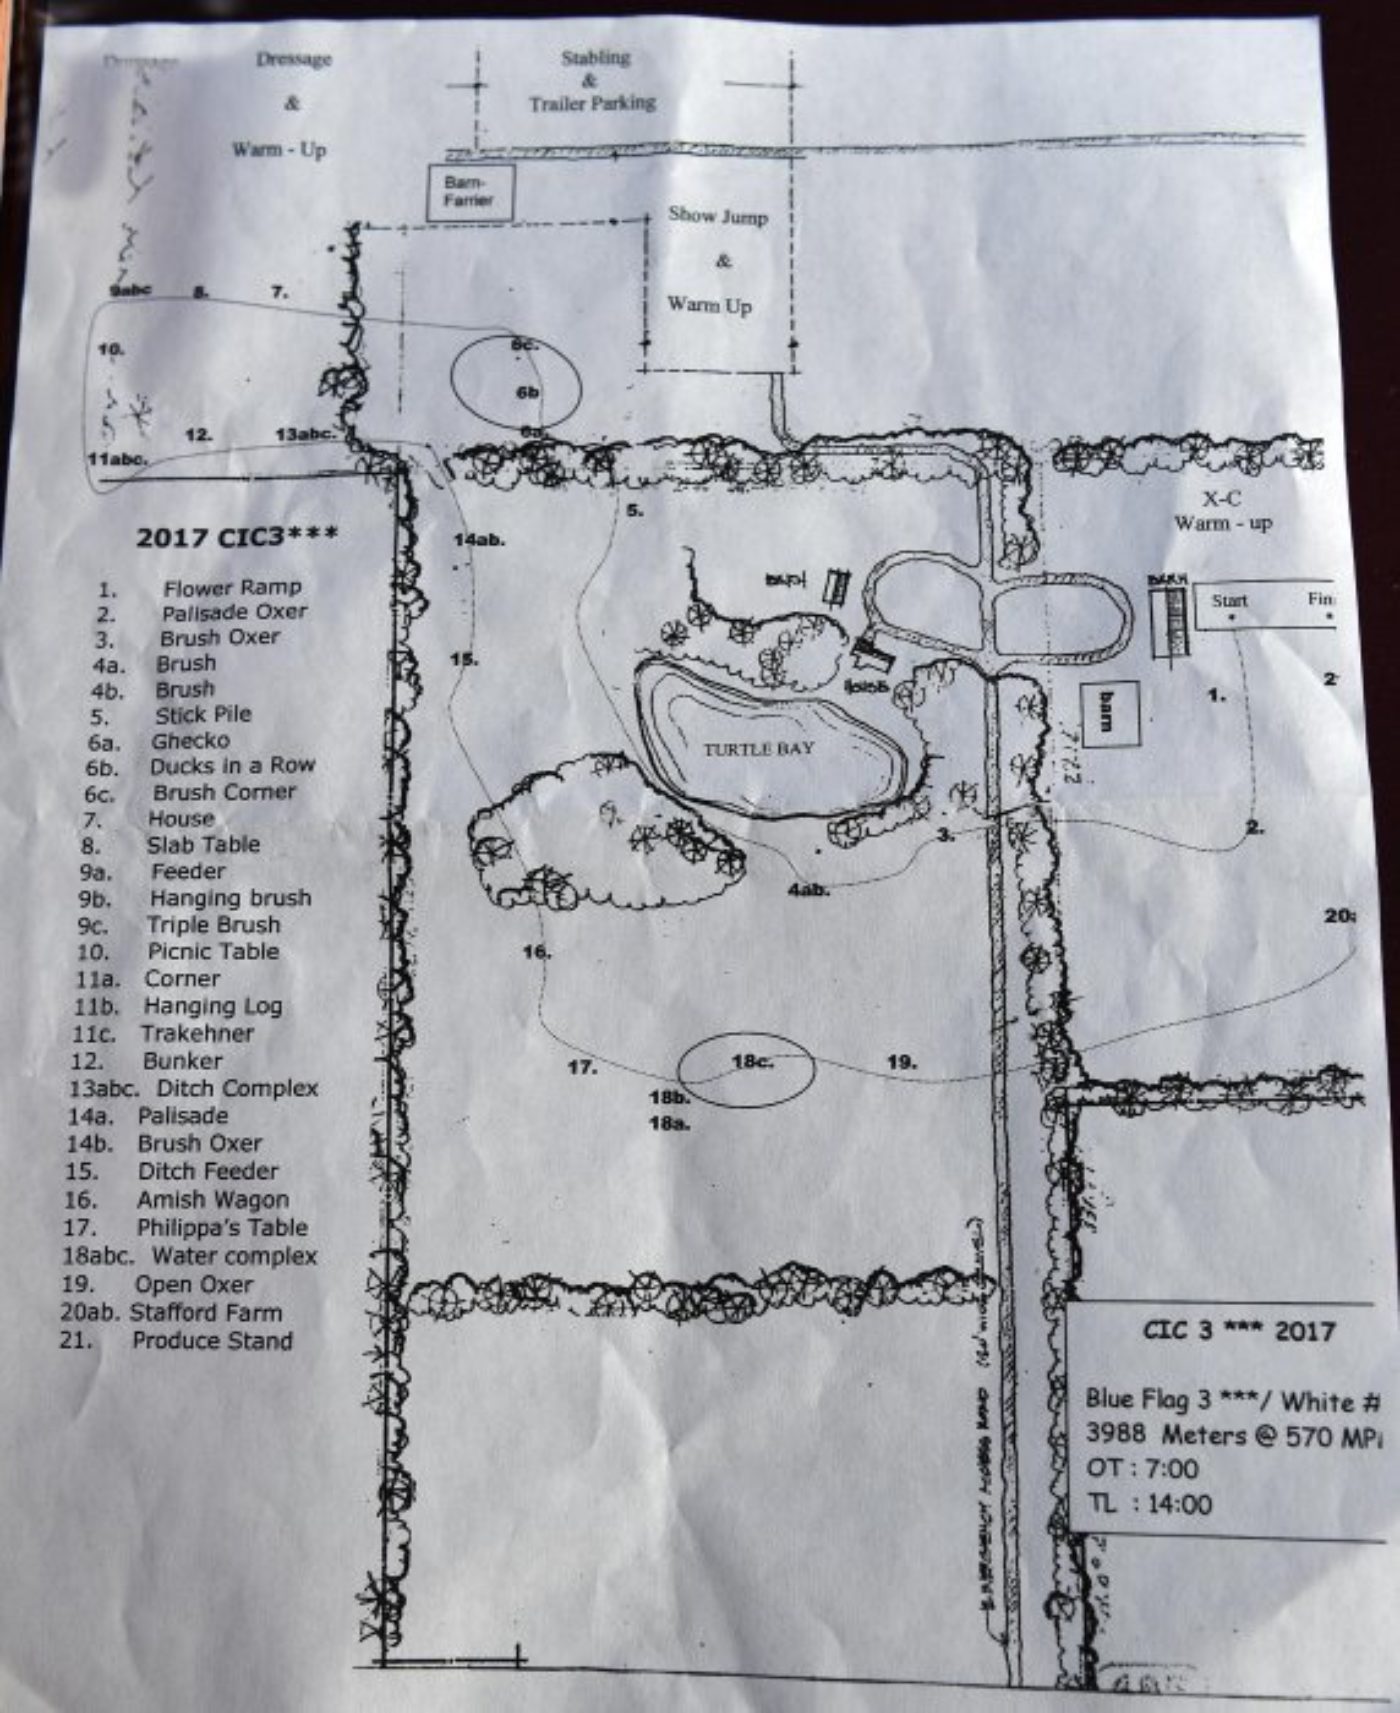 The Richland Park CIC3* Course Map